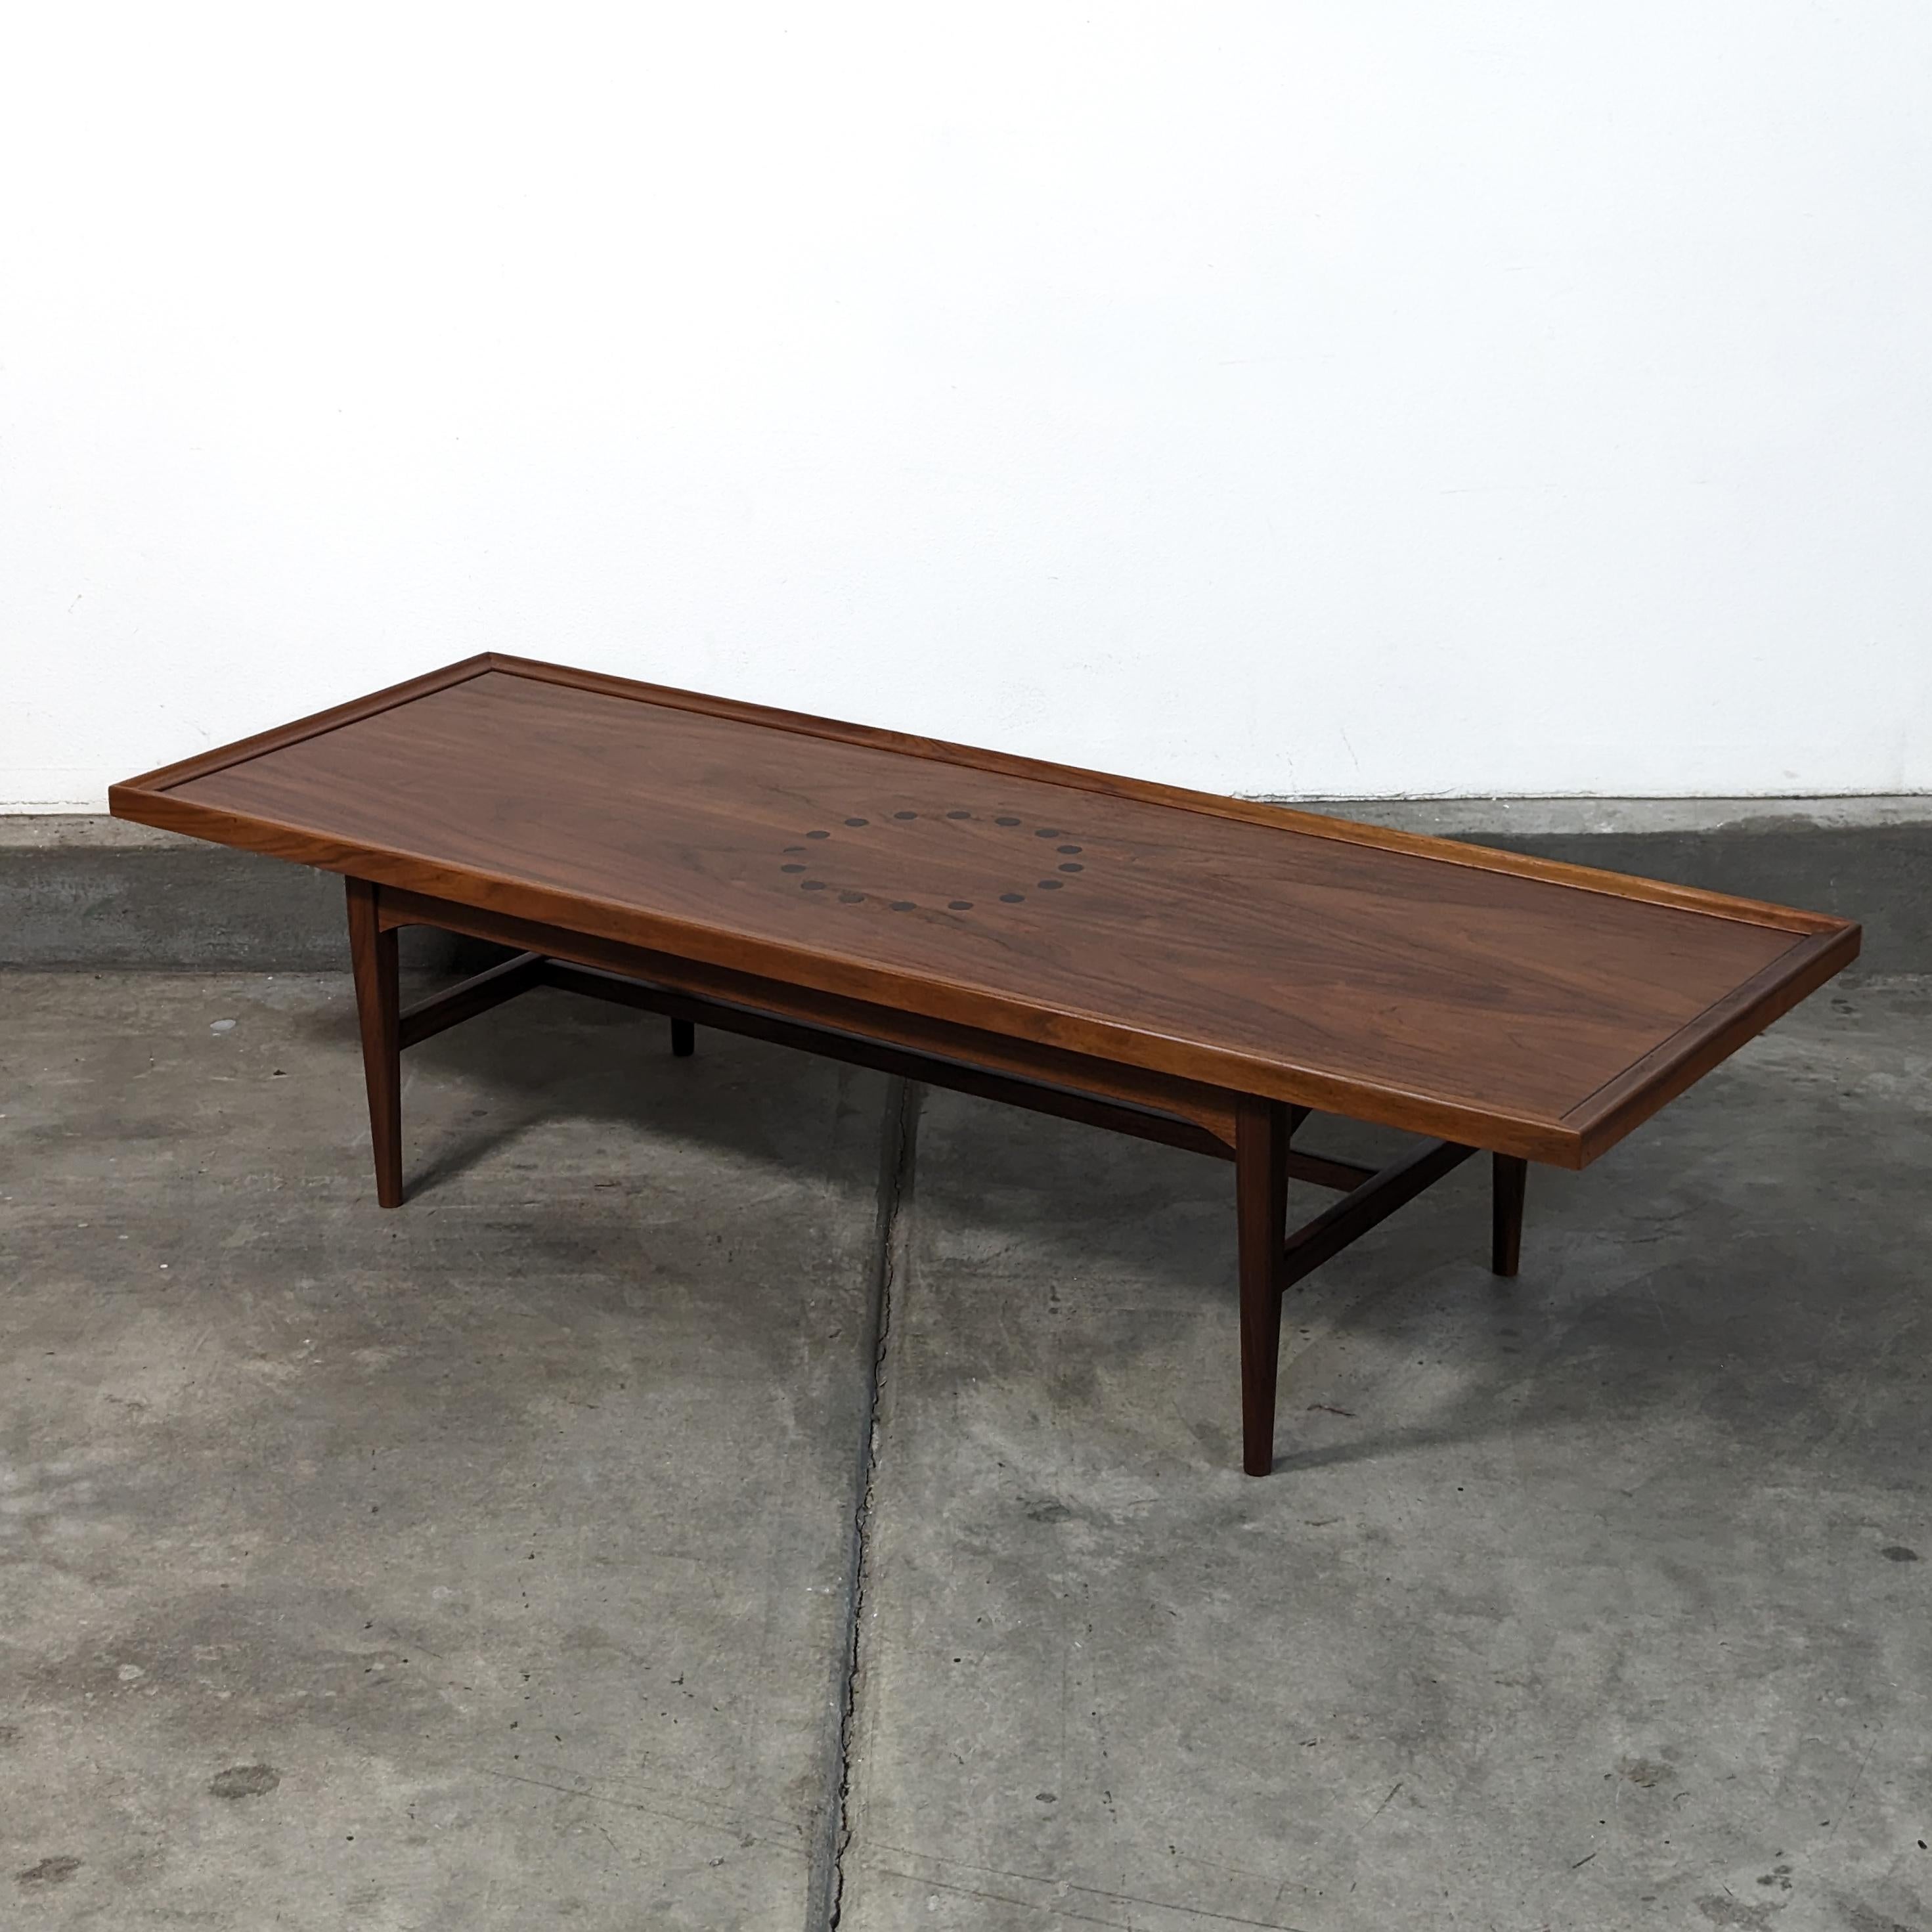 Walnut Mid Century Modern Coffee Table By Drexel, Declaration Line, c1960s For Sale